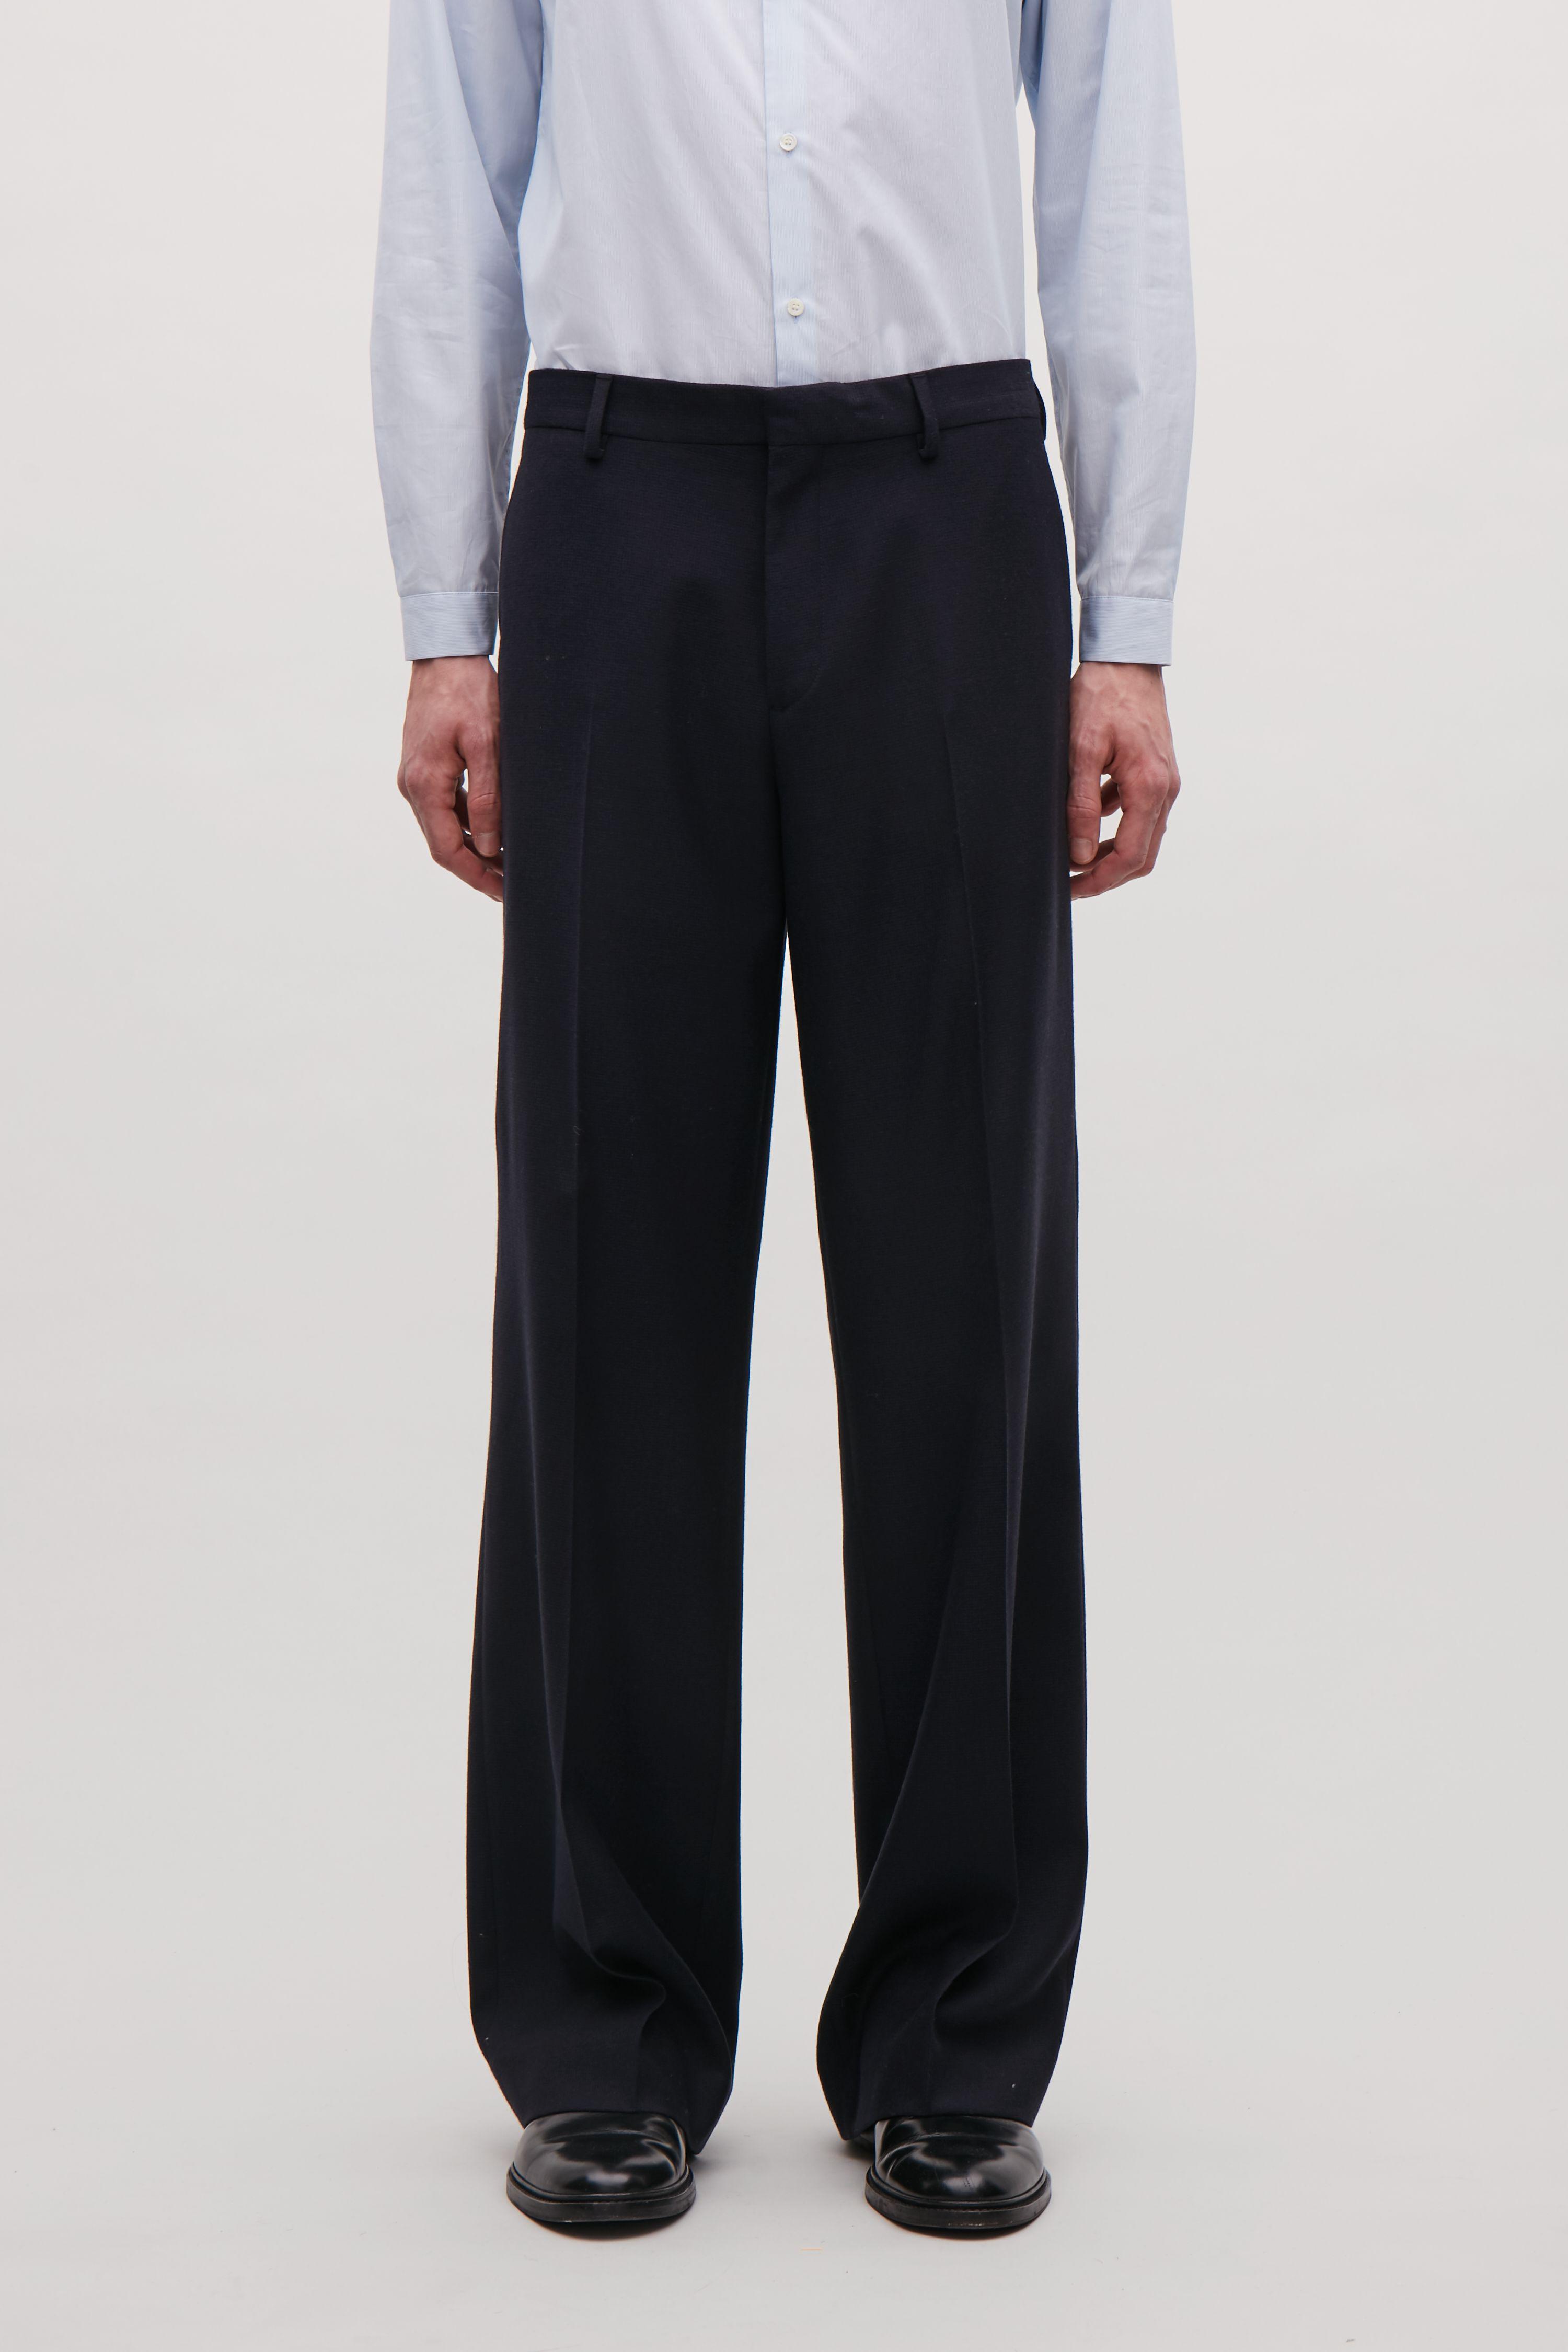 COS Wool Wide-leg Trousers in Navy (Blue) for Men - Lyst